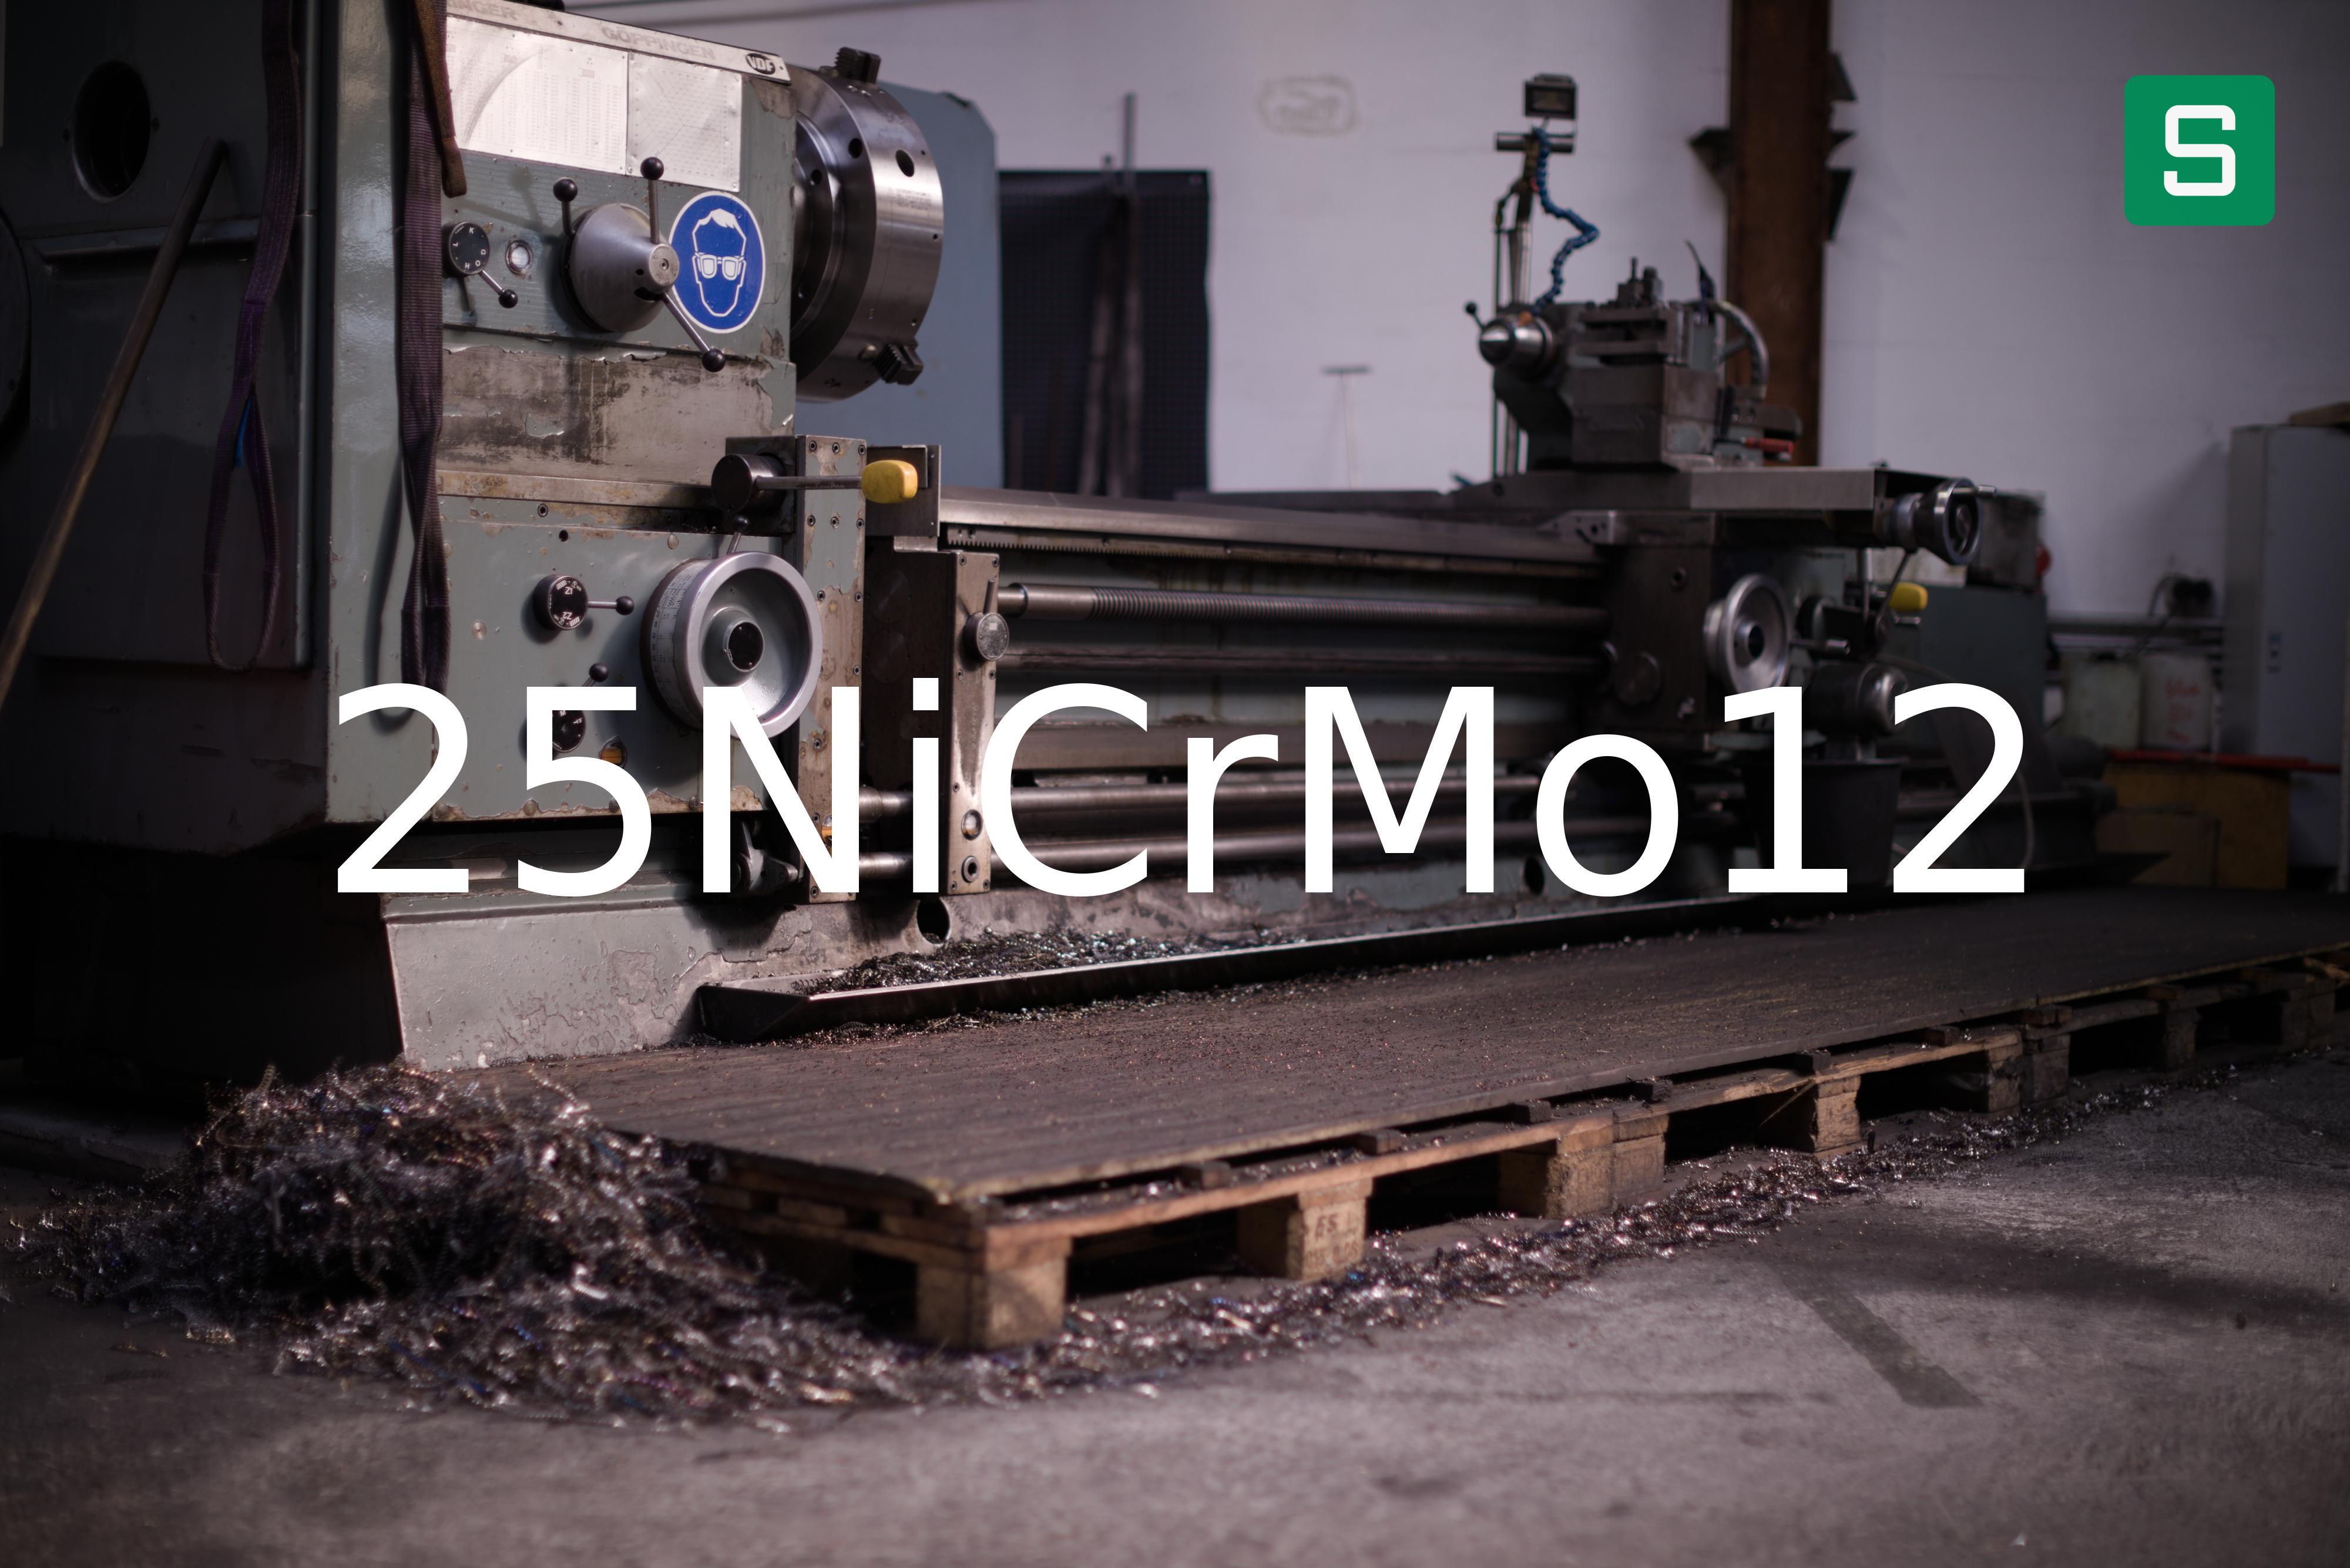 Steel Material: 25NiCrMo12